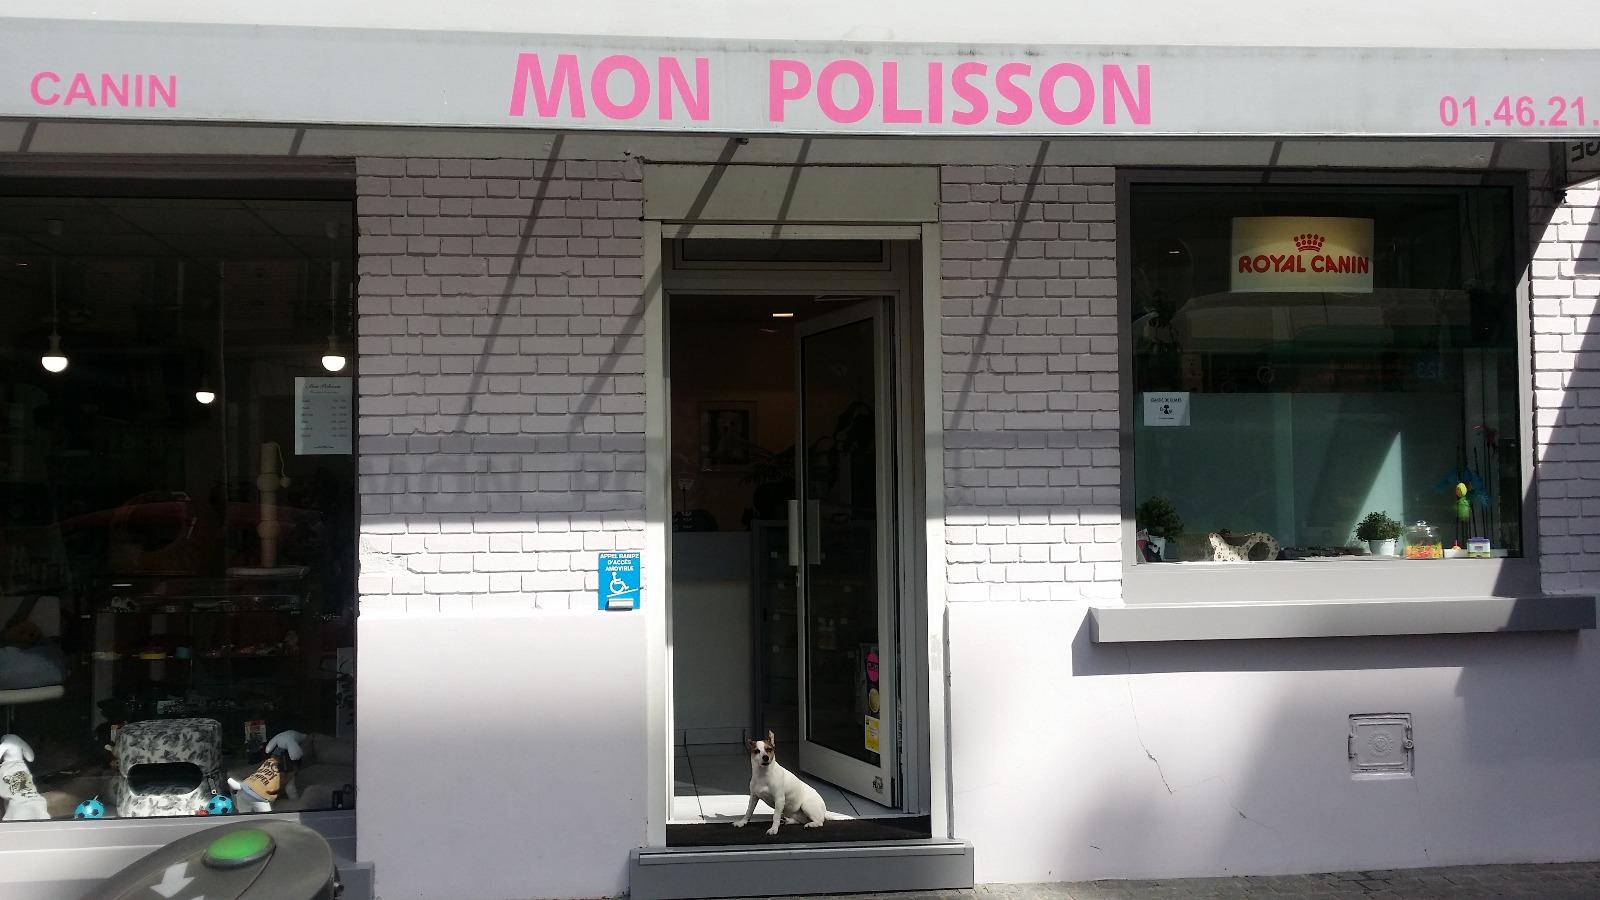 MON POLISSON